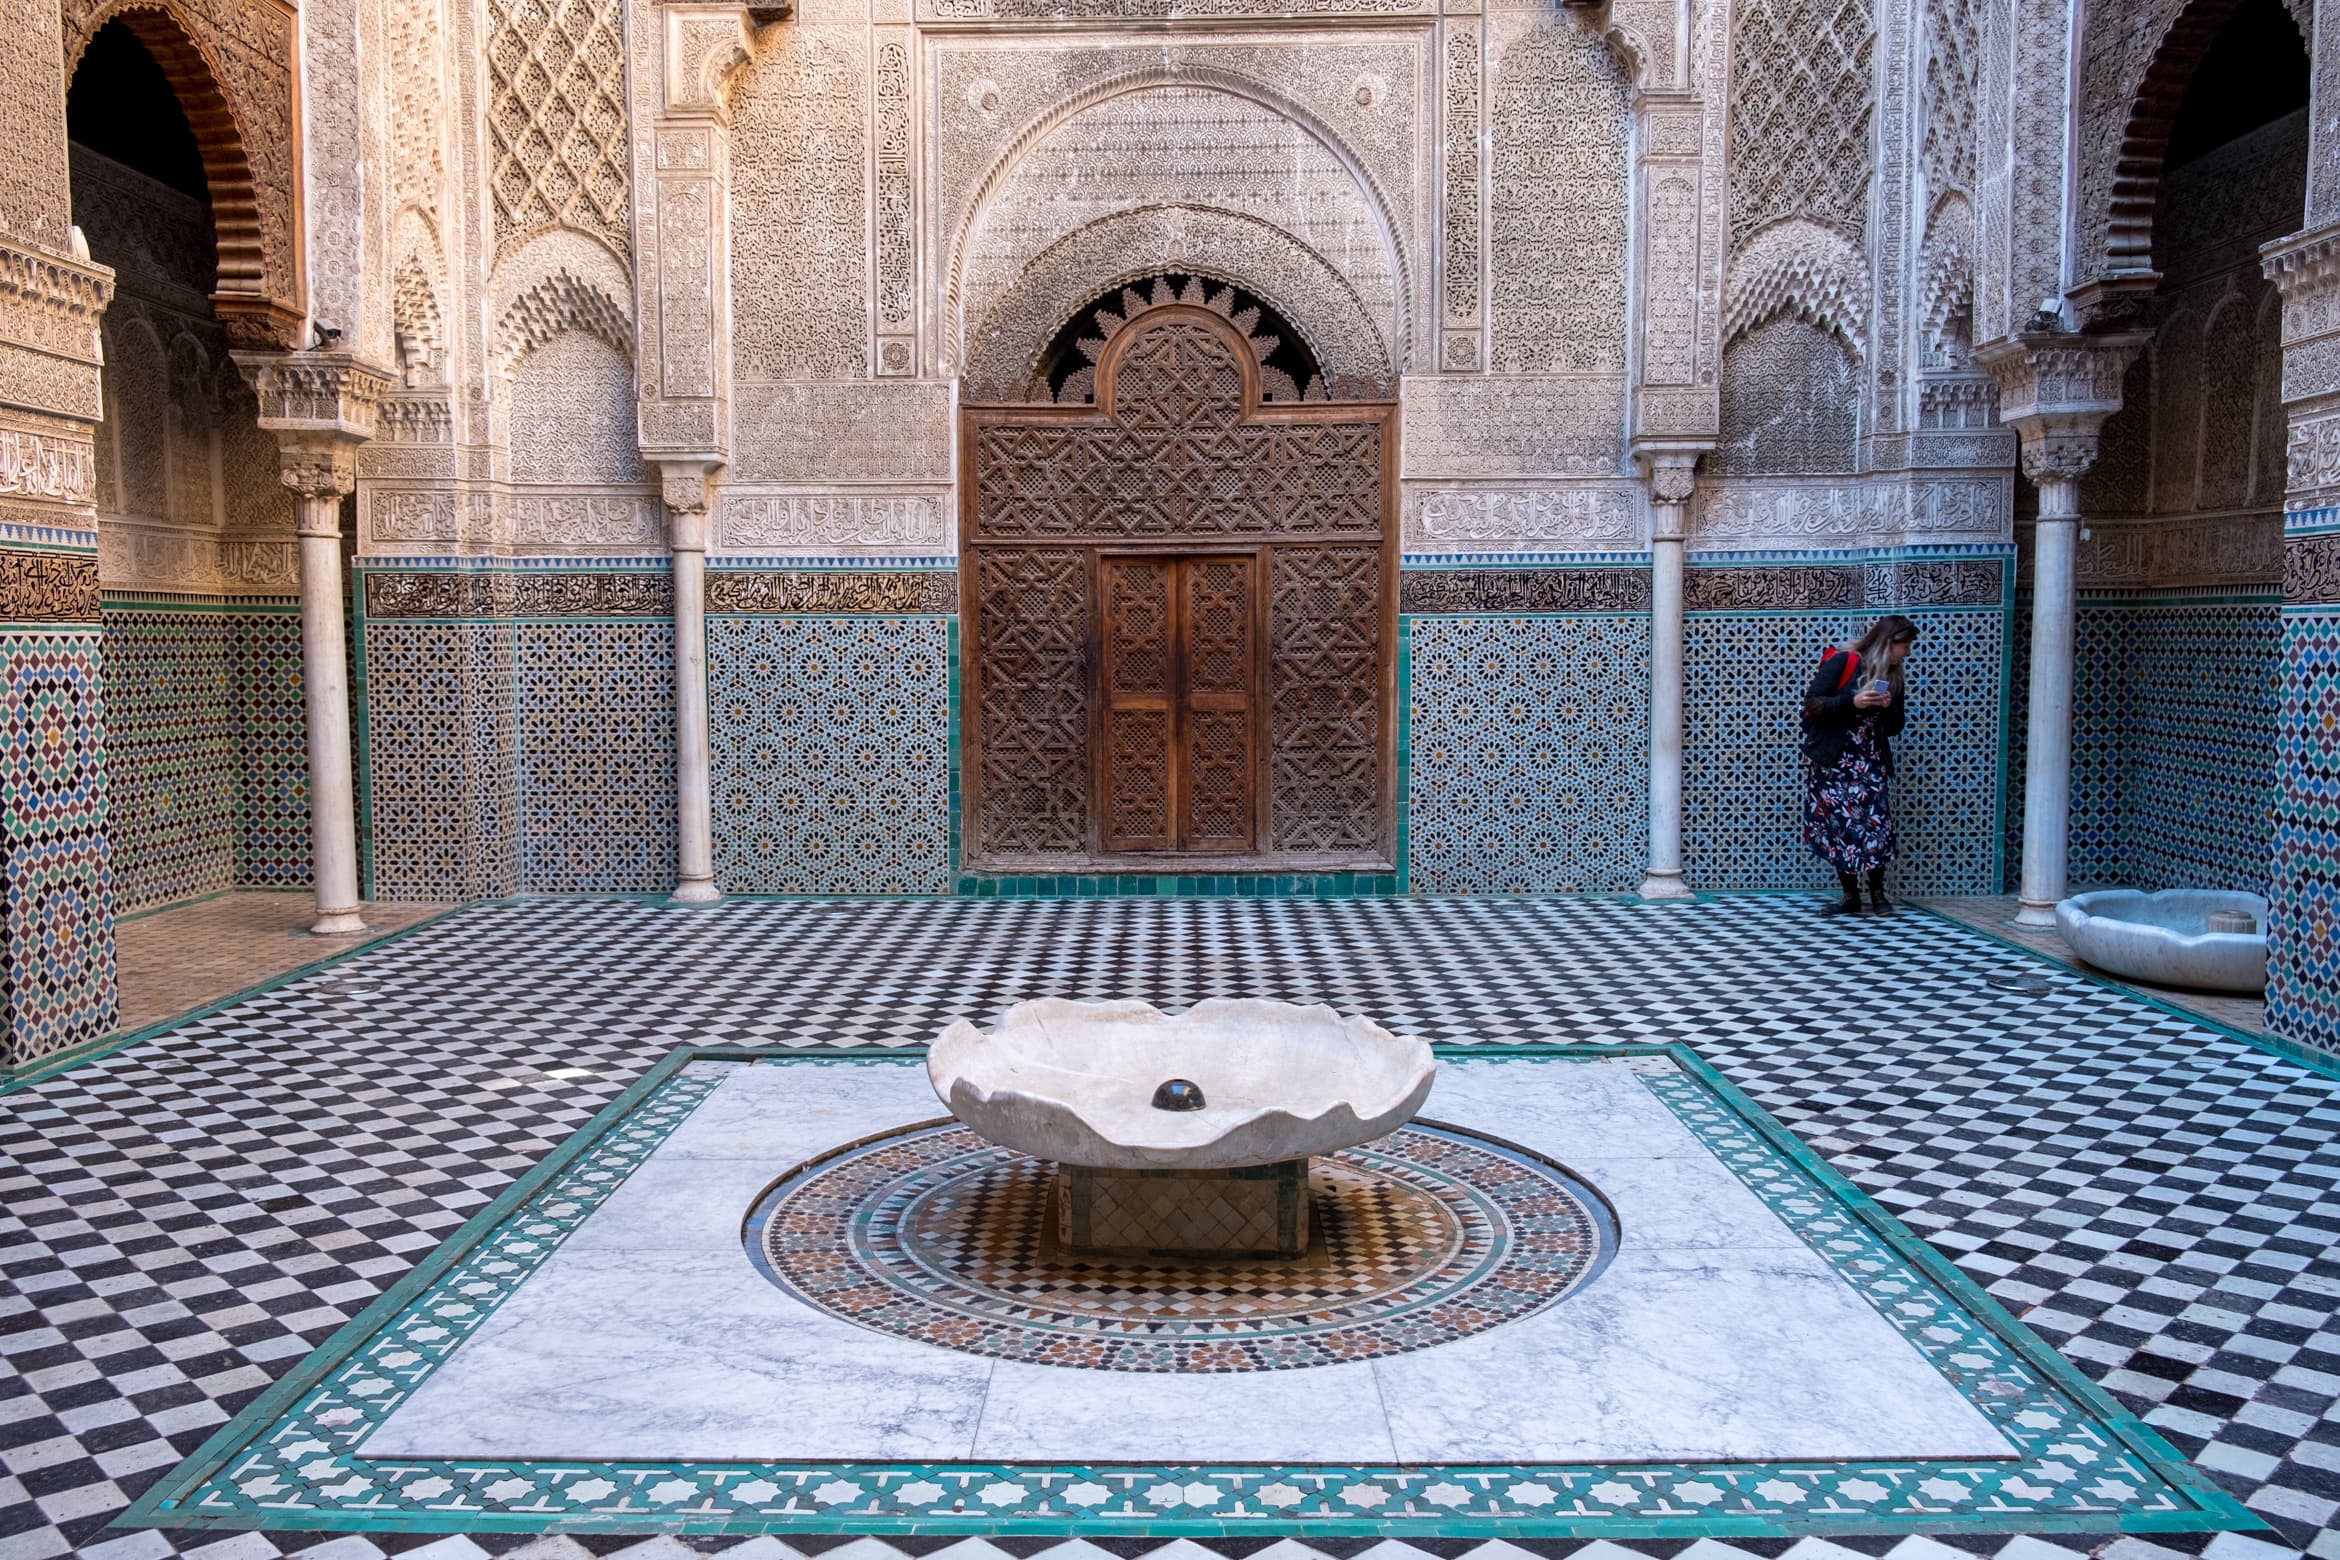 Grand courtyard in the University of al-Qarawiyyin